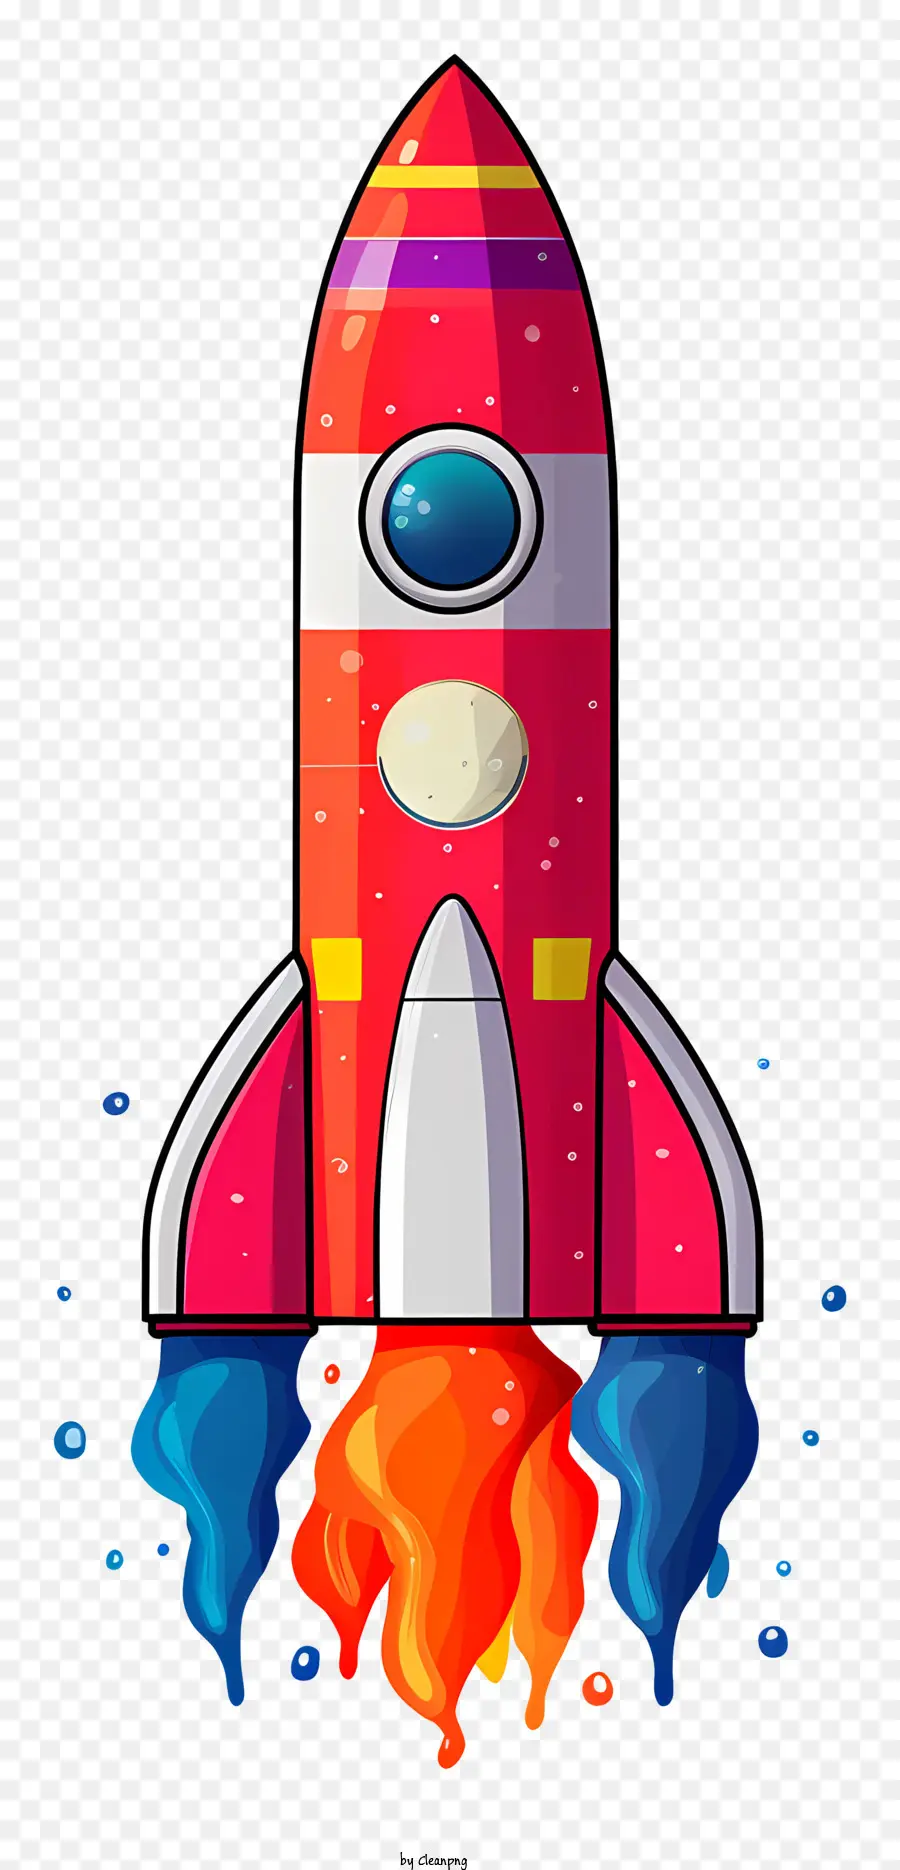 Cartoon Rocket Ship Rocket Ship Illustration Red and Orange Stripe Blue Punted Nose - Cartoon Rocket Ship che vola in sfondo nero